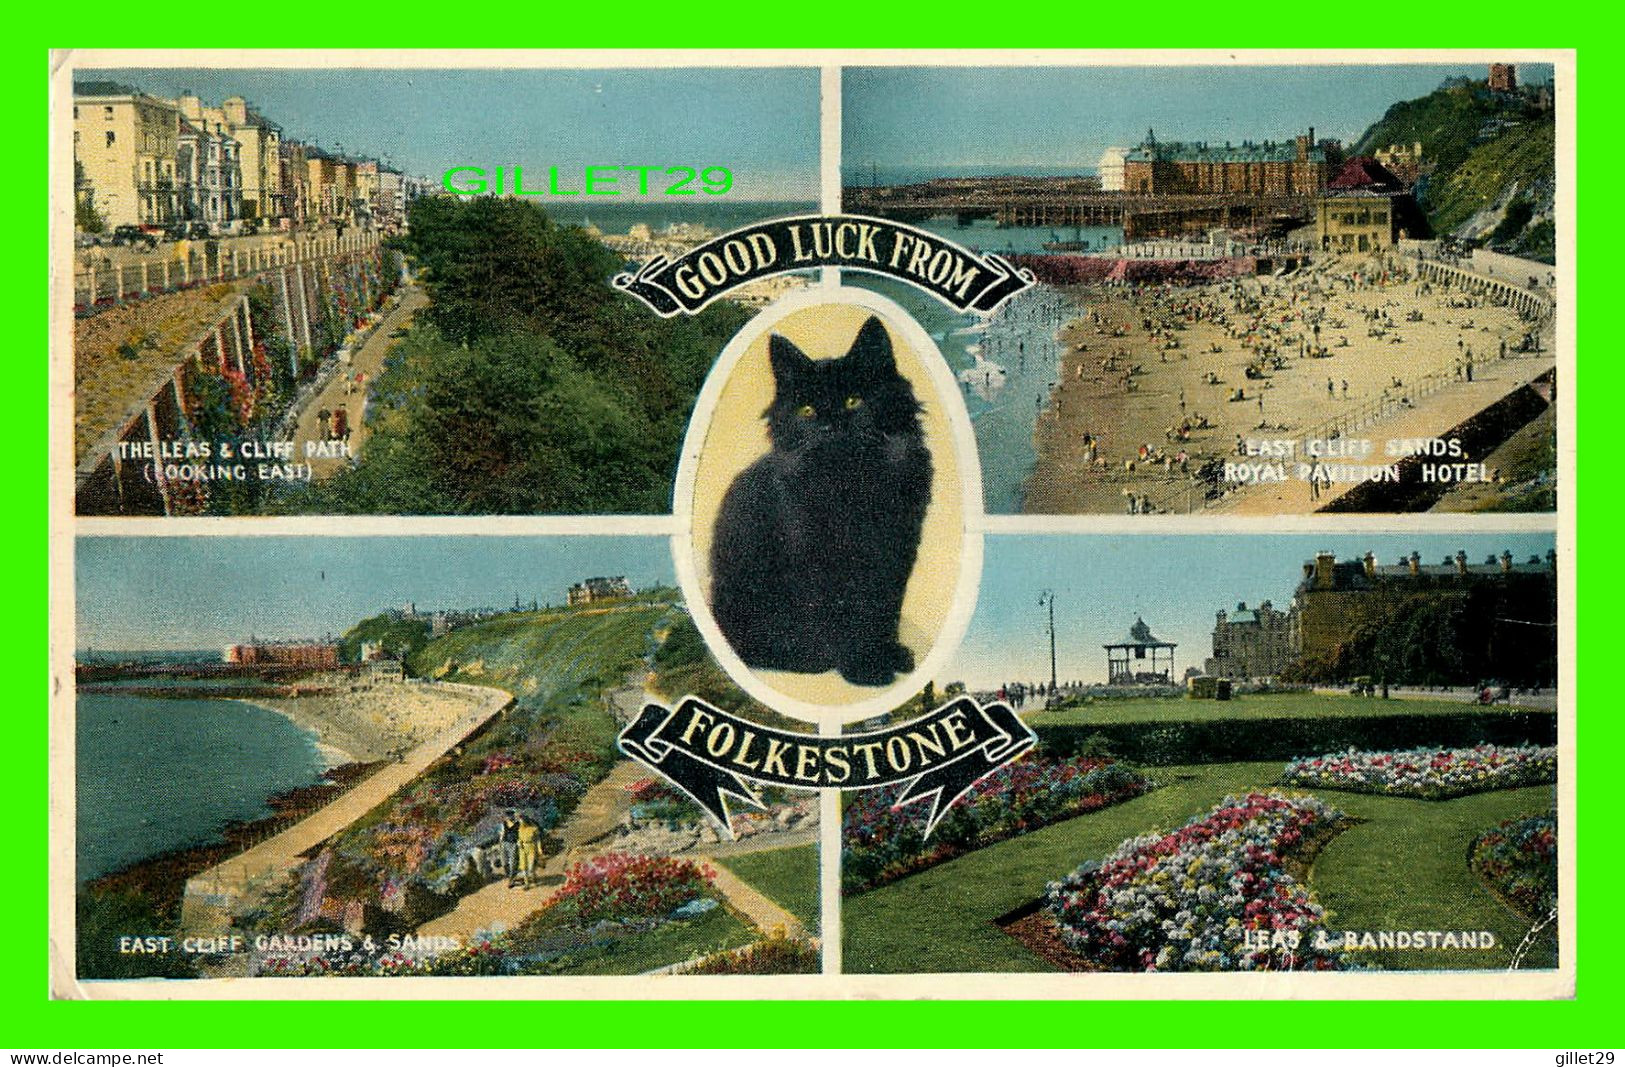 FOLKESTONE, KENT, UK - 7 MULTIVUES - PUB. BY LANSDOWNE PUB. CO - BLACK CAT  - TRAVEL IN 1956 - - Folkestone